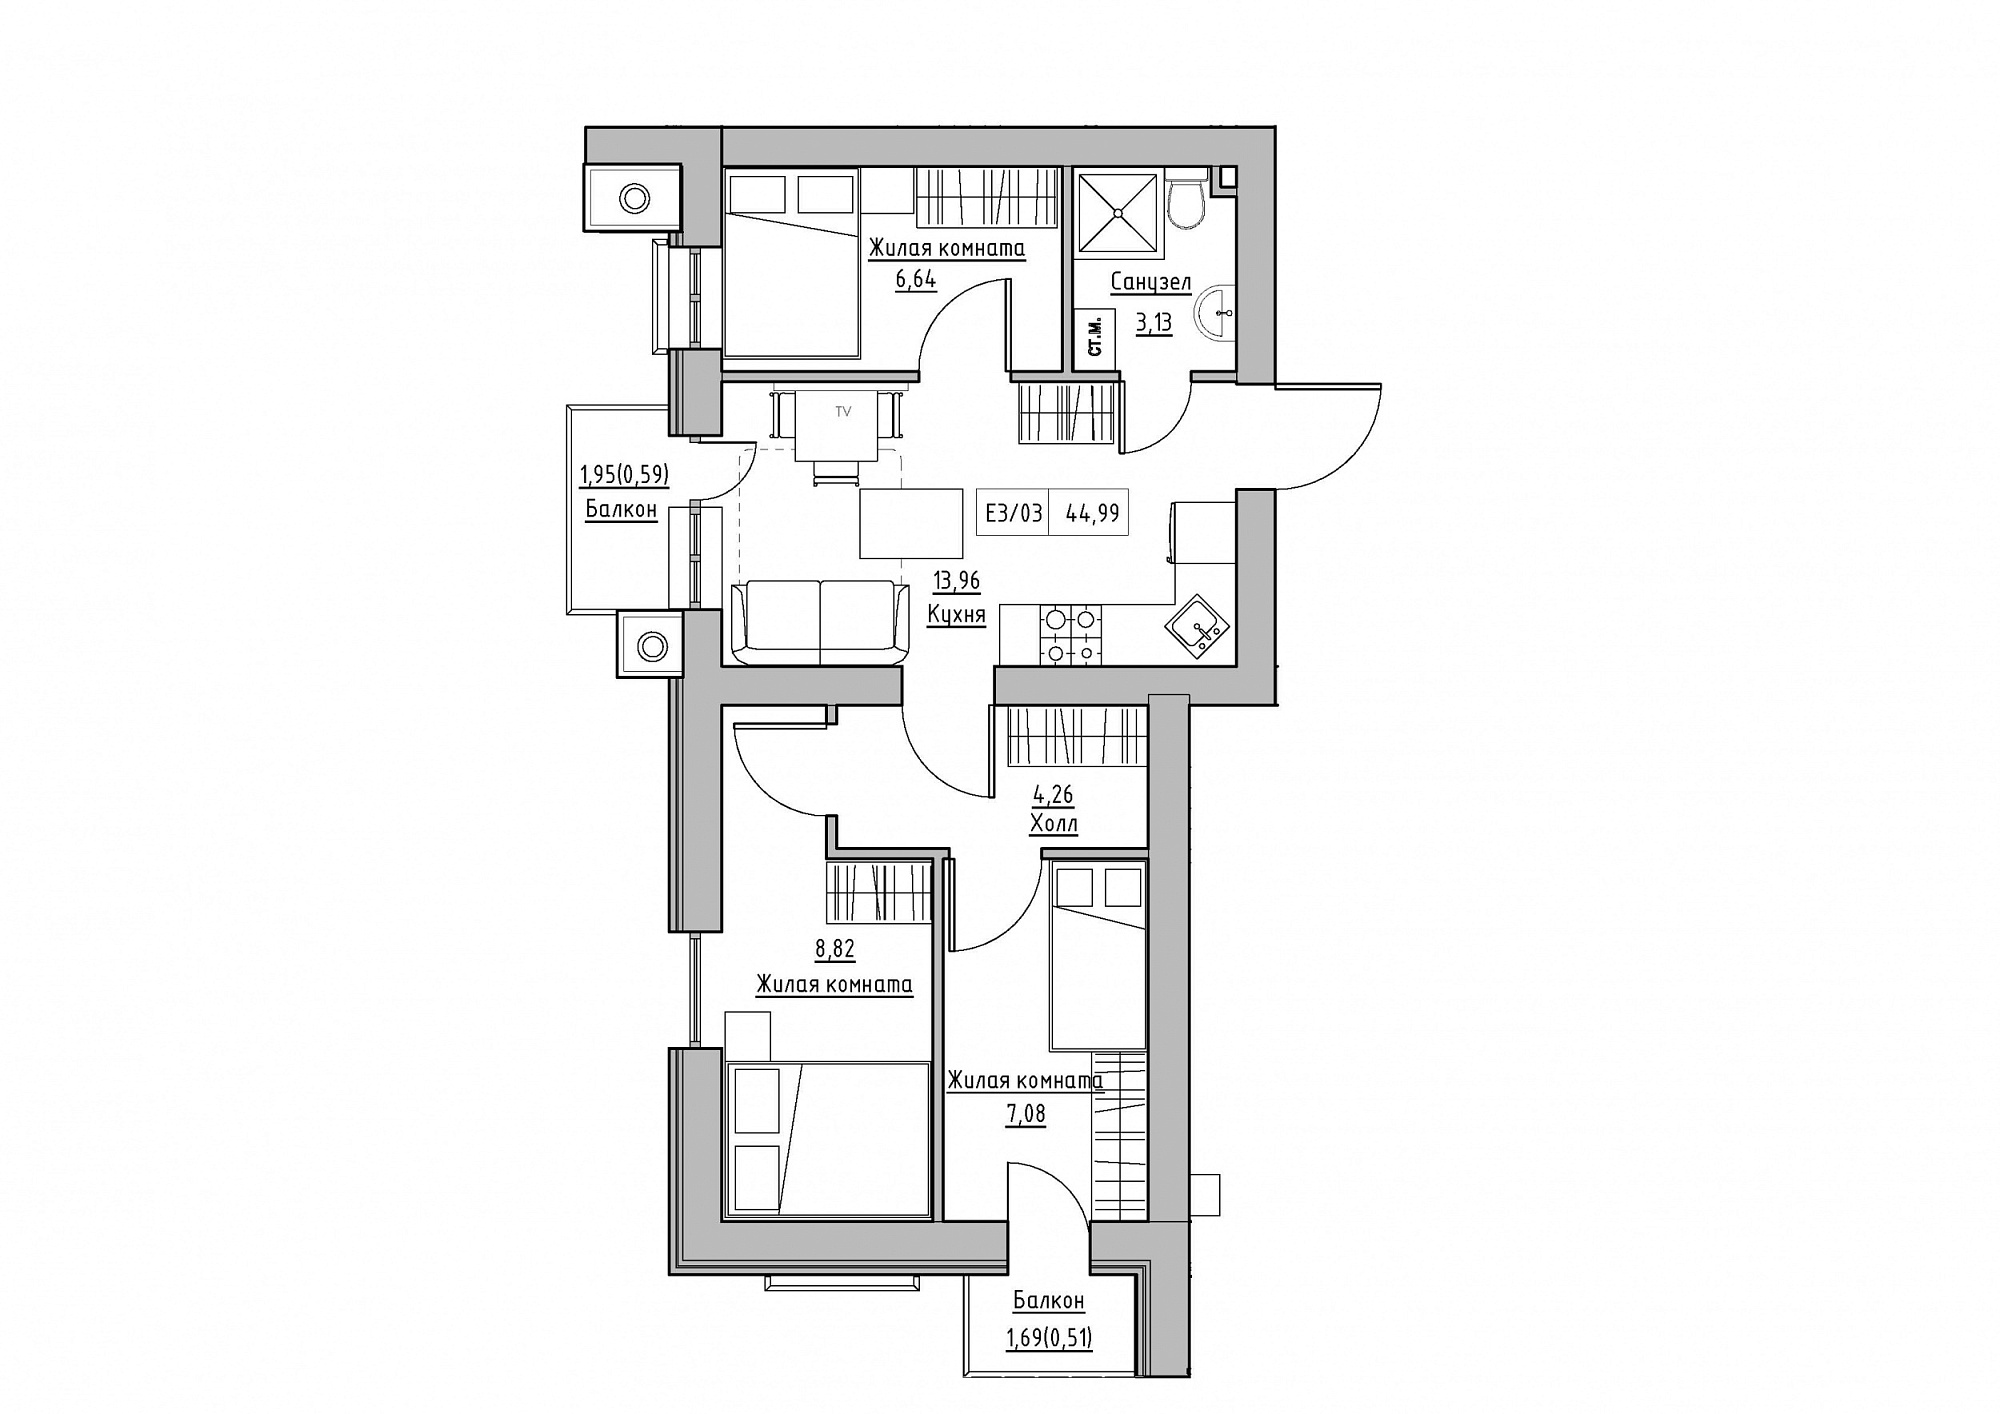 Planning 3-rm flats area 44.99m2, KS-012-05/0011.